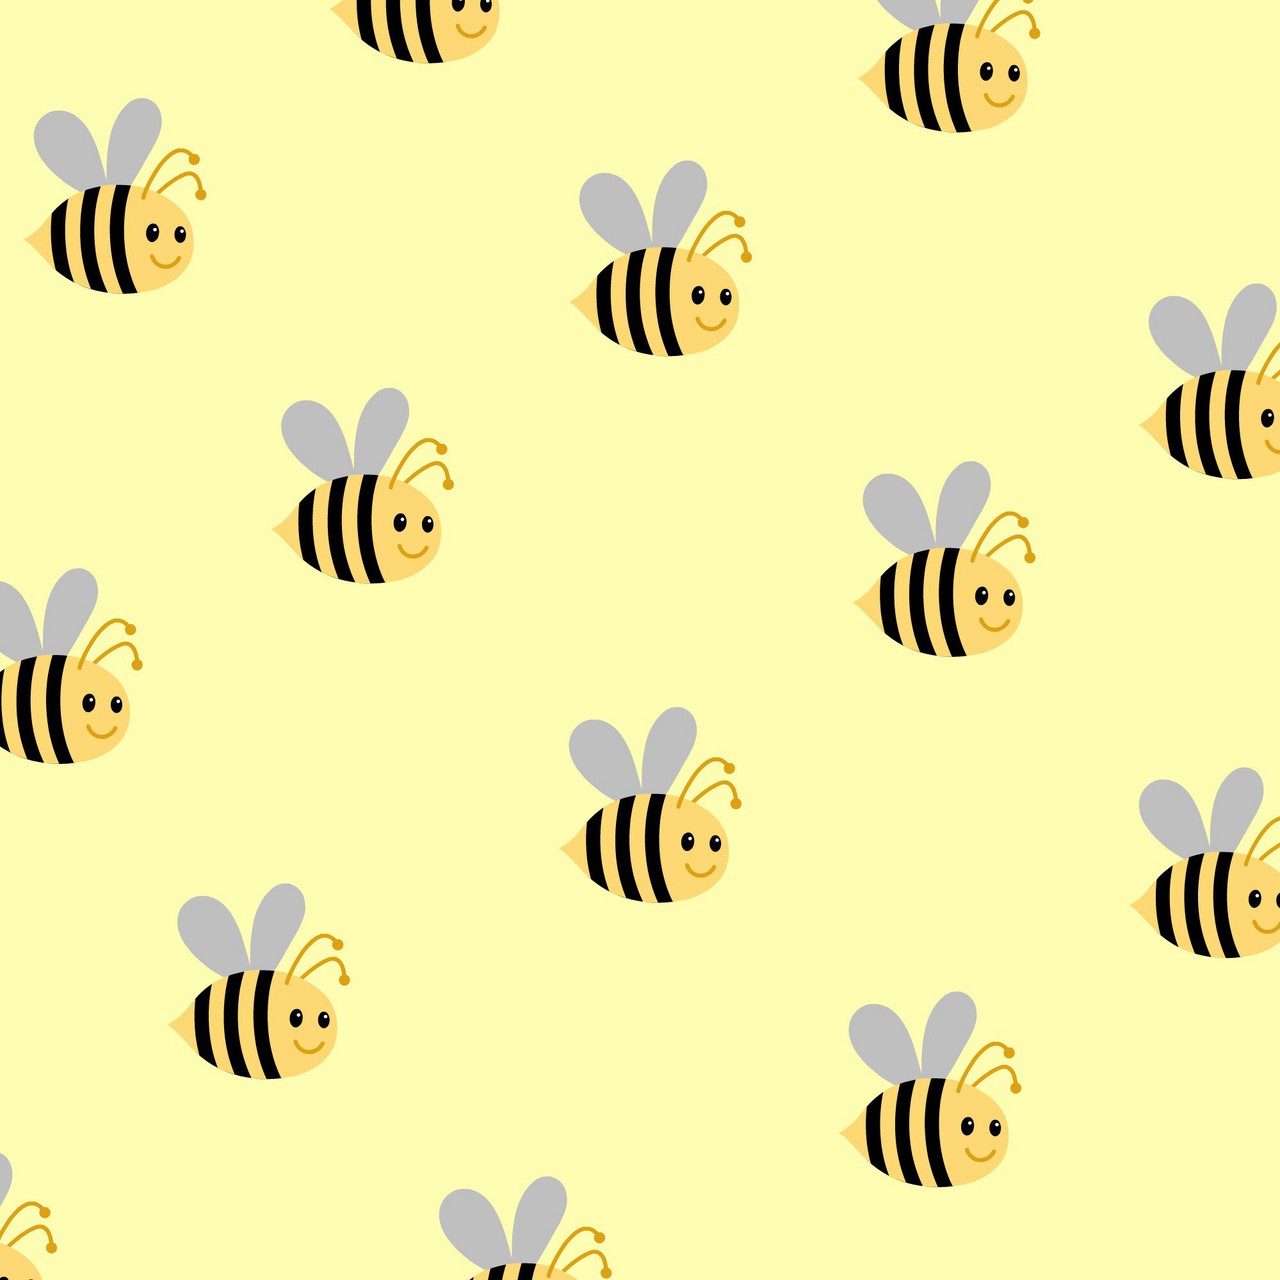 Wallpaper, Bee, And Yellow Image - Wallpaper - HD Wallpaper 